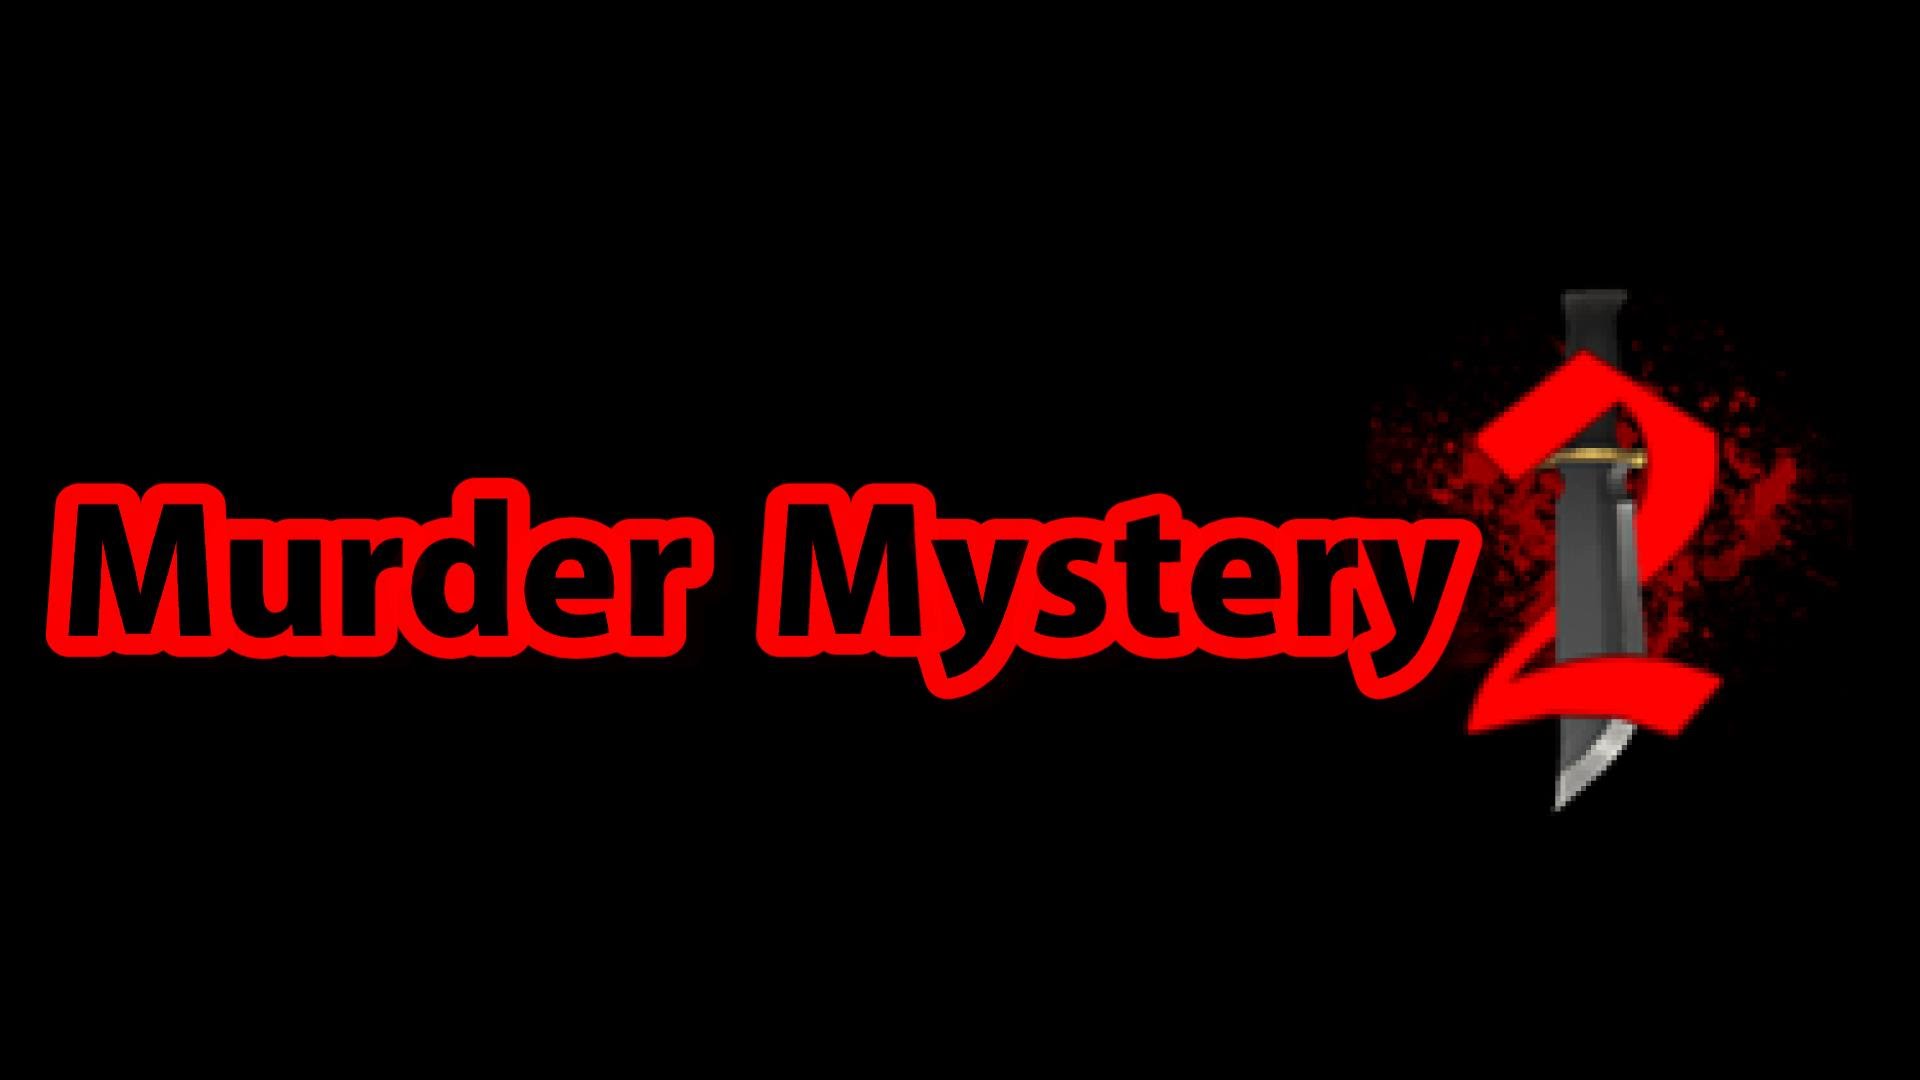 Роблокс mystery 2. Murder Mystery РОБЛОКС. Murder Mystery 2. РОБЛОКС Murder Mystery 2. Murder Mystery 2 Roblox.